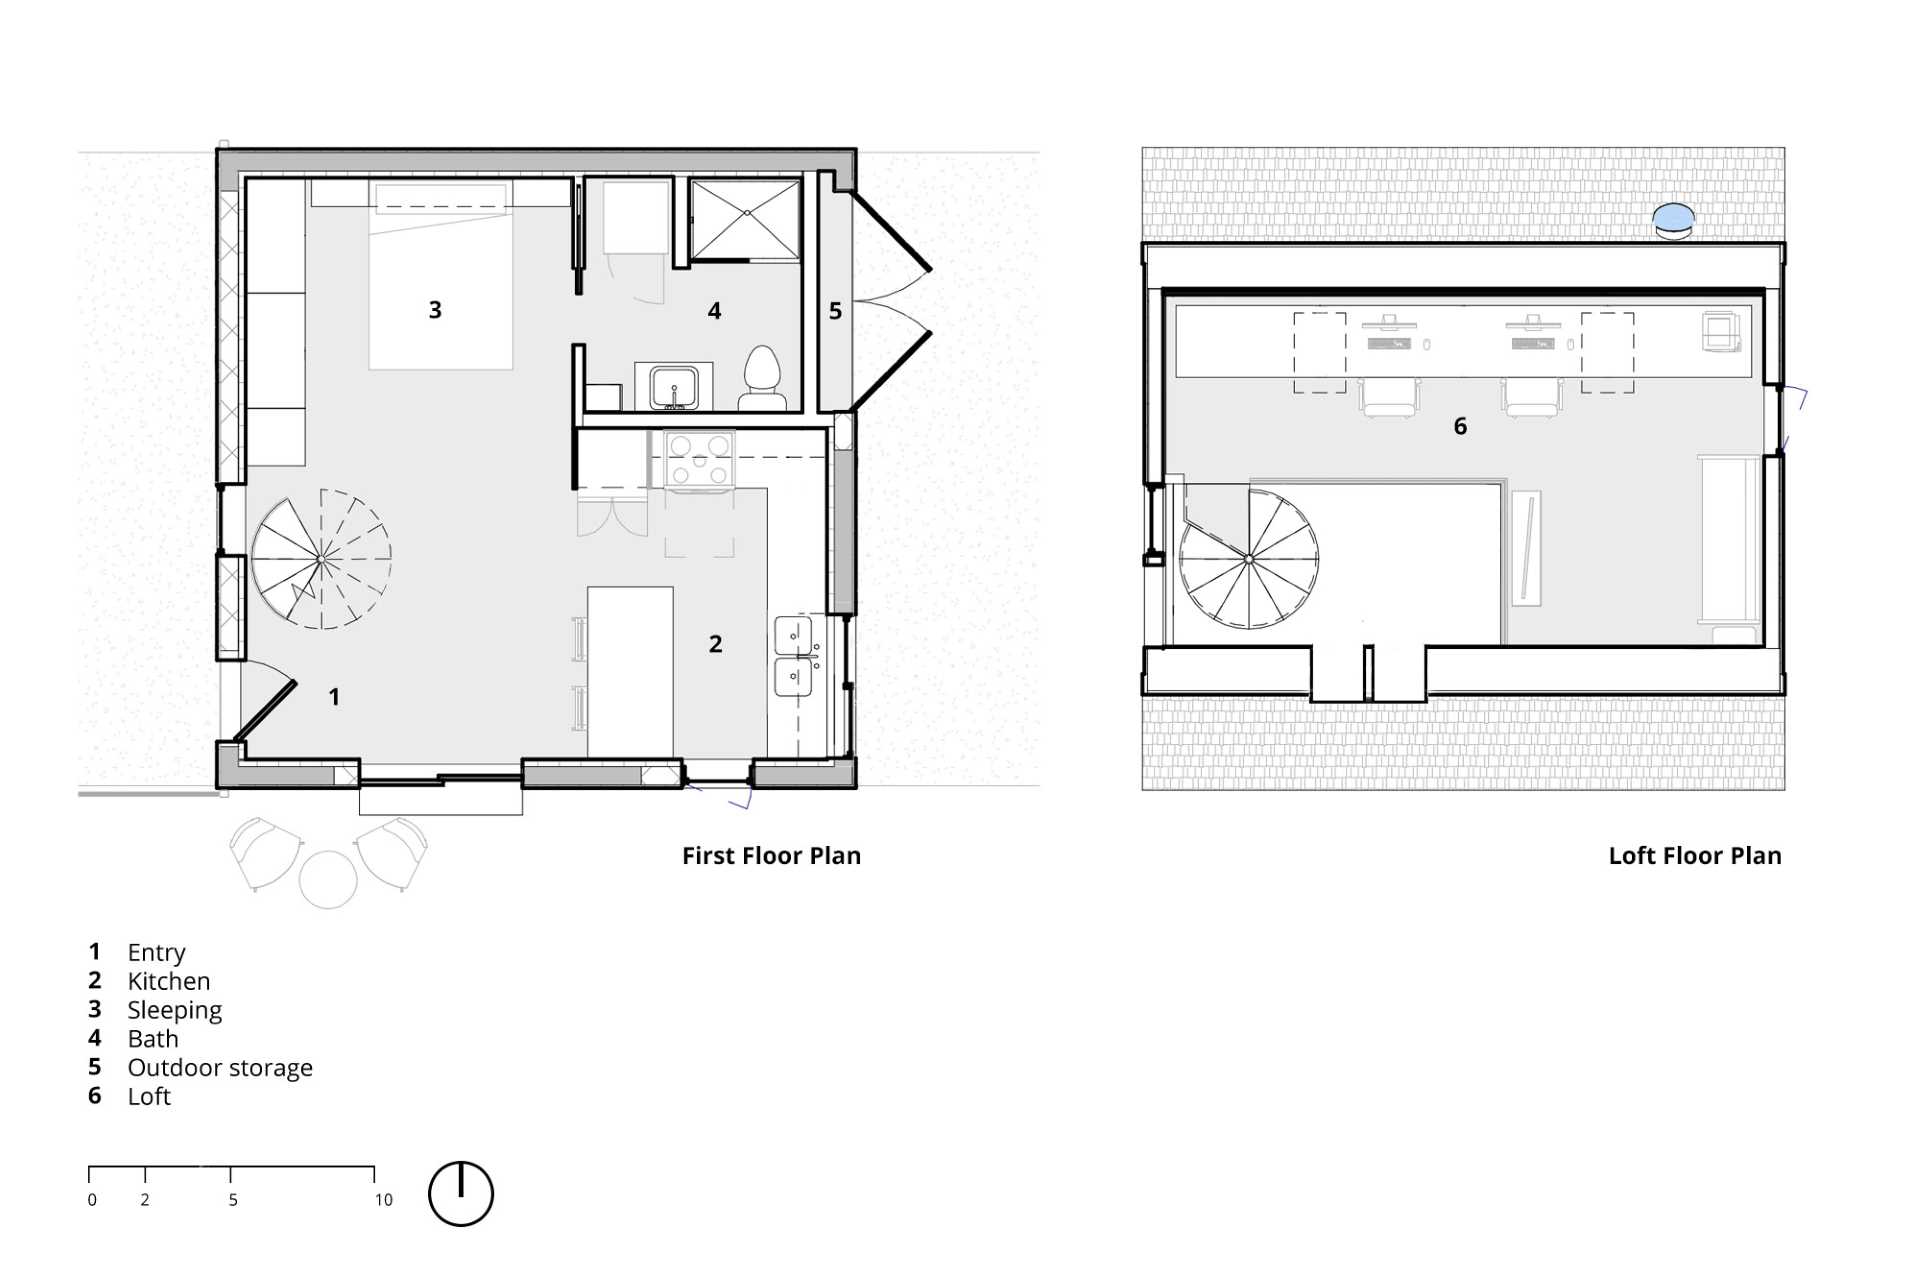 The floor plan for an ADU (accessory dwelling unit).